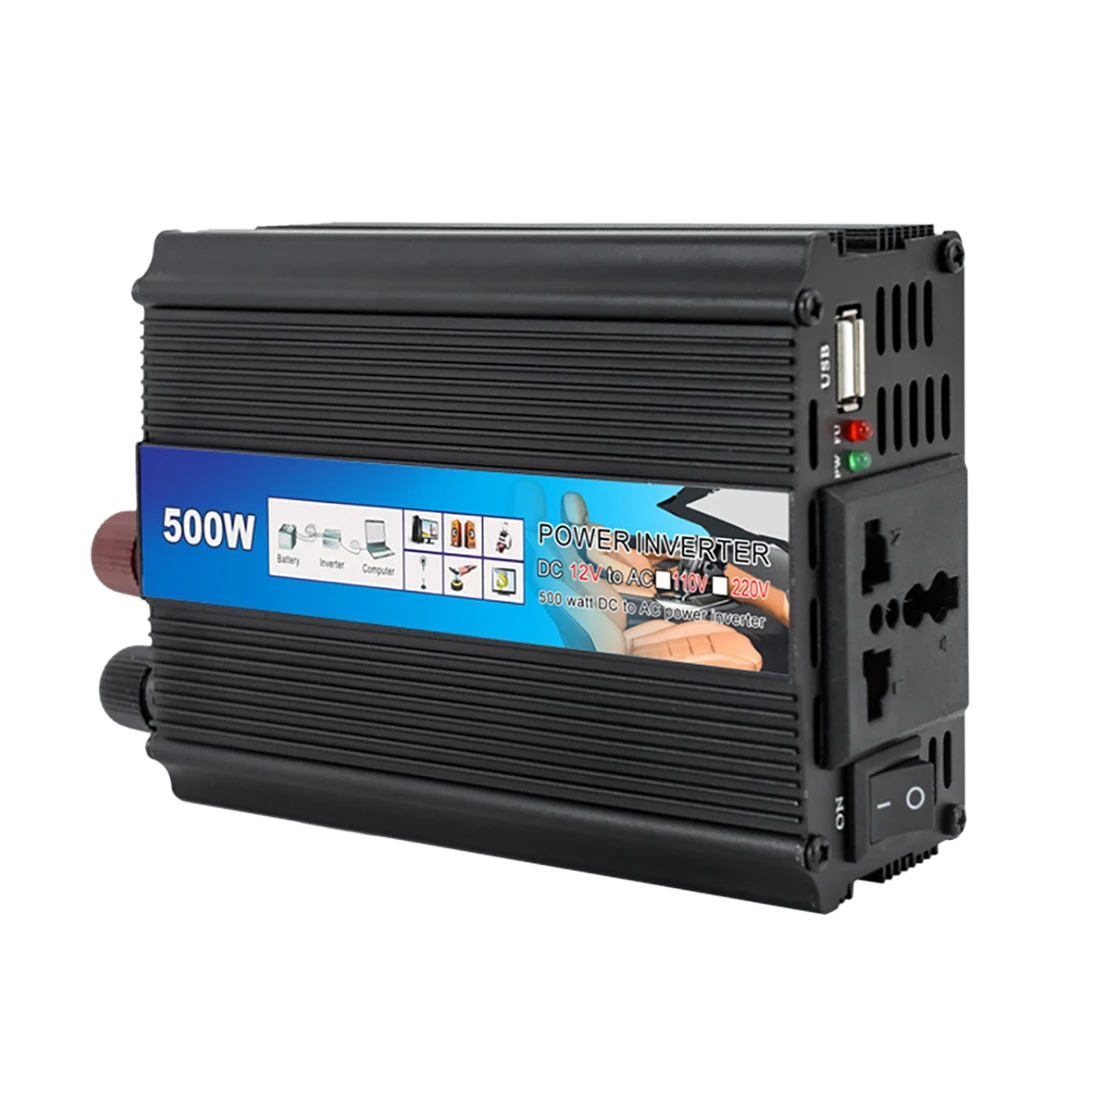 

500W Car Power Inverter DC12V to AC220V USB Car Converter Boost Transformer Vehicle Supply Power Inverter for Cars